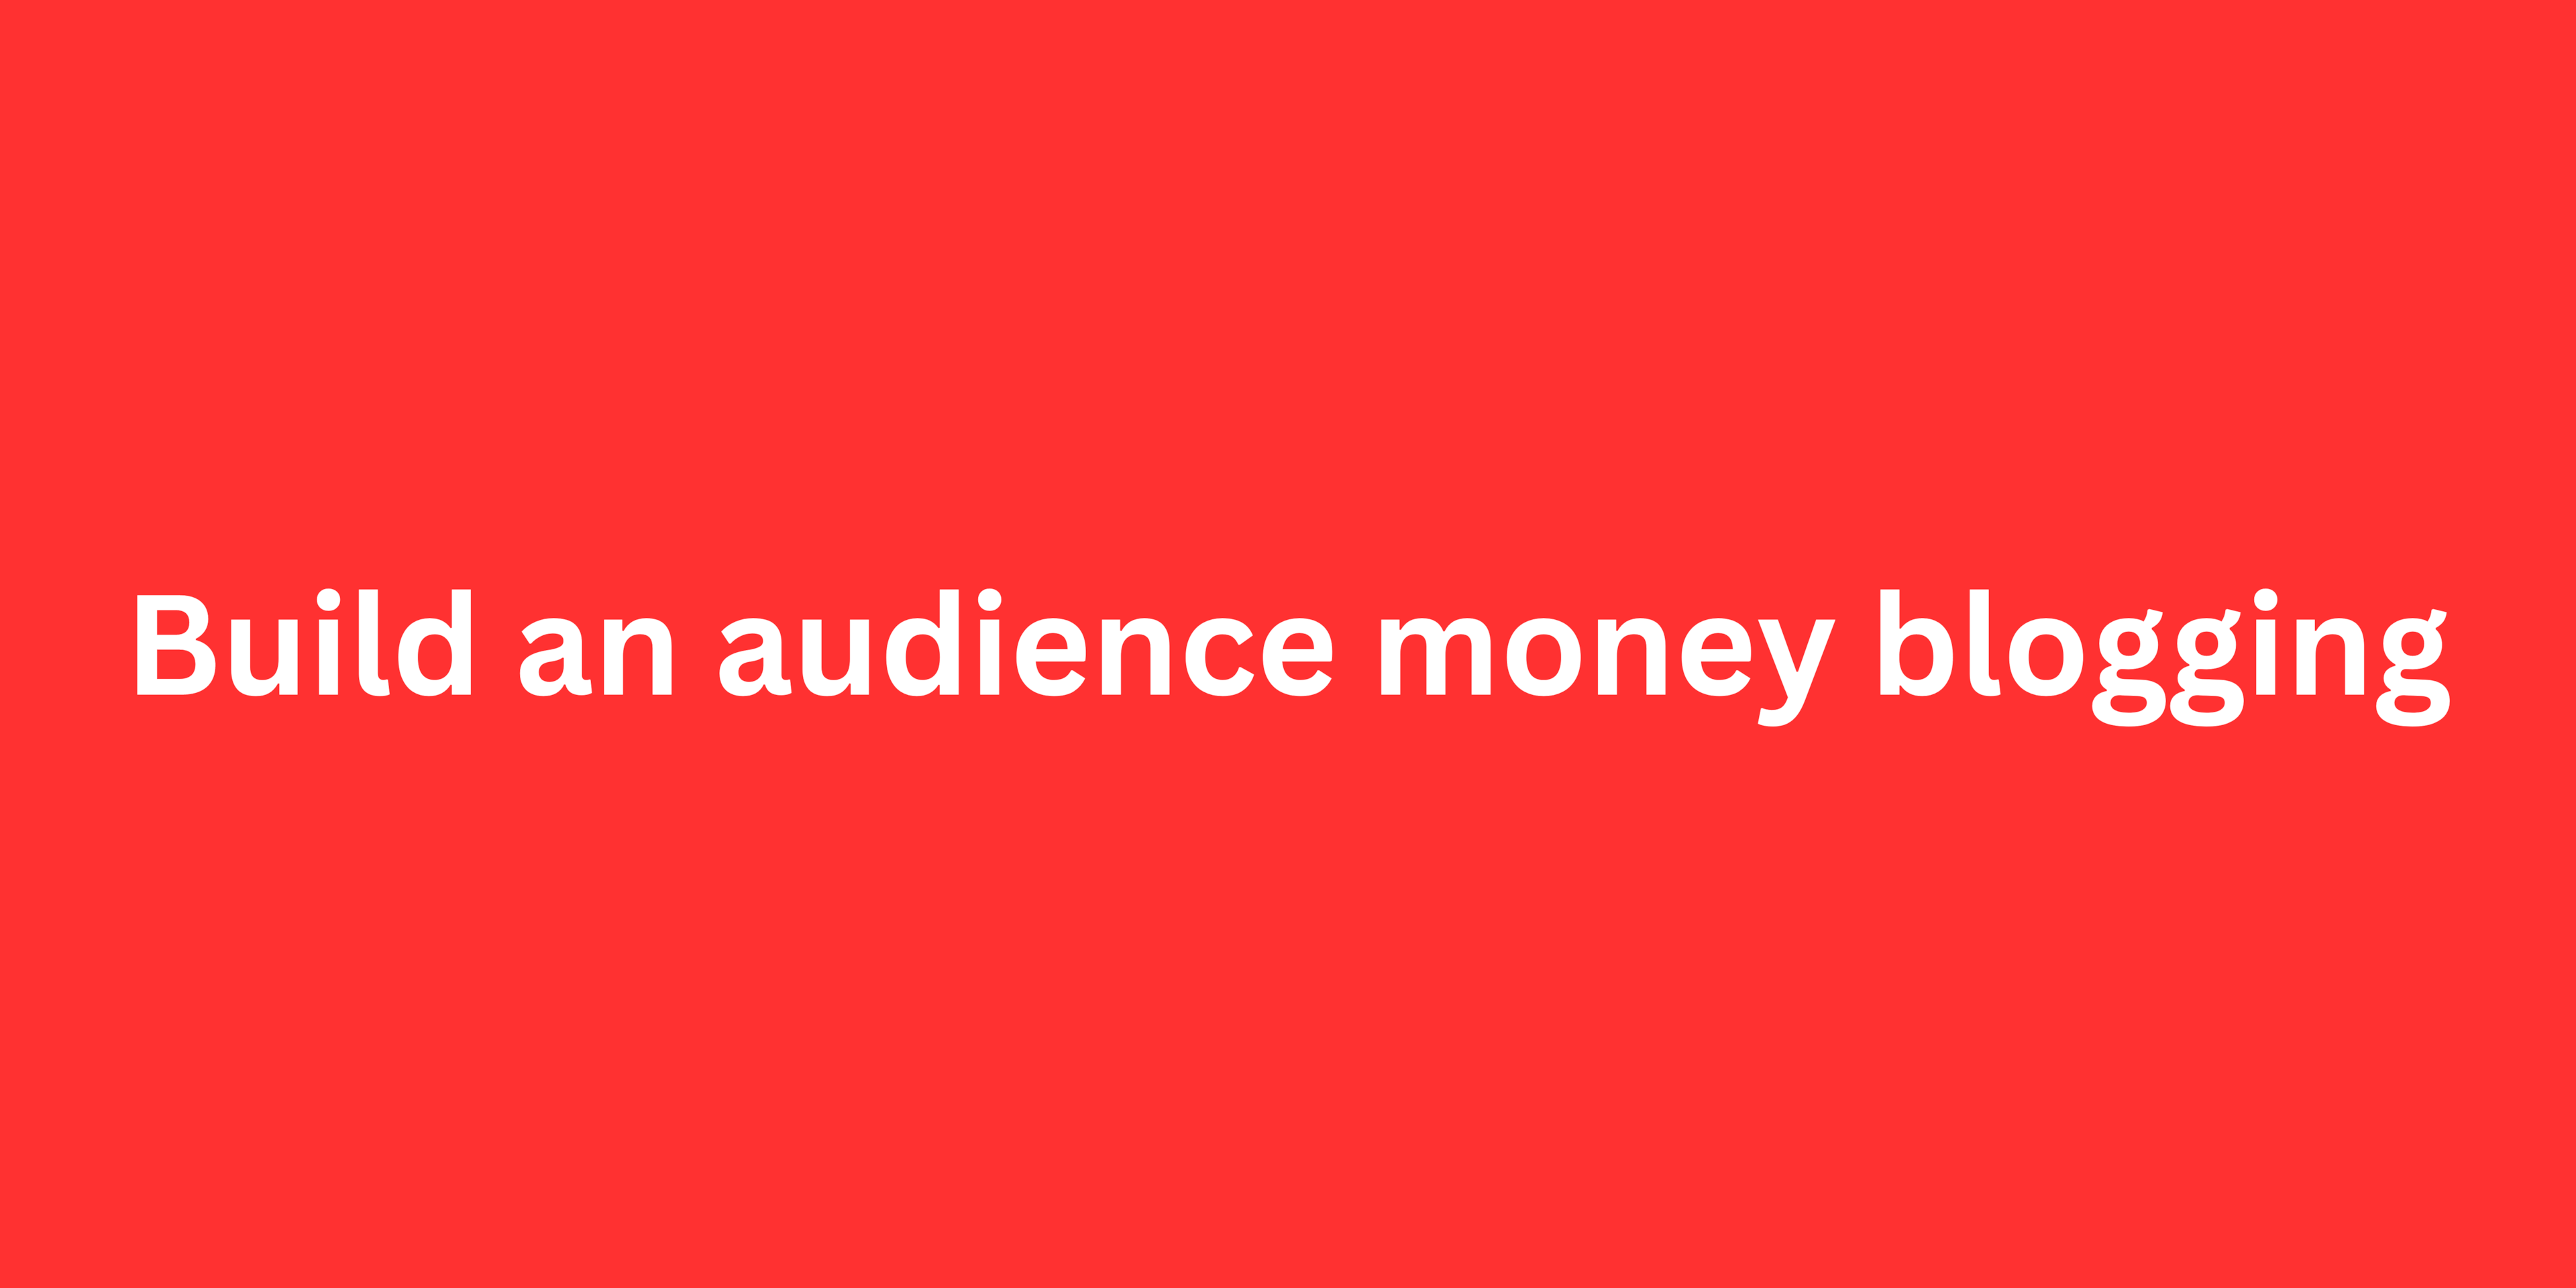 Build an audience money blogging: